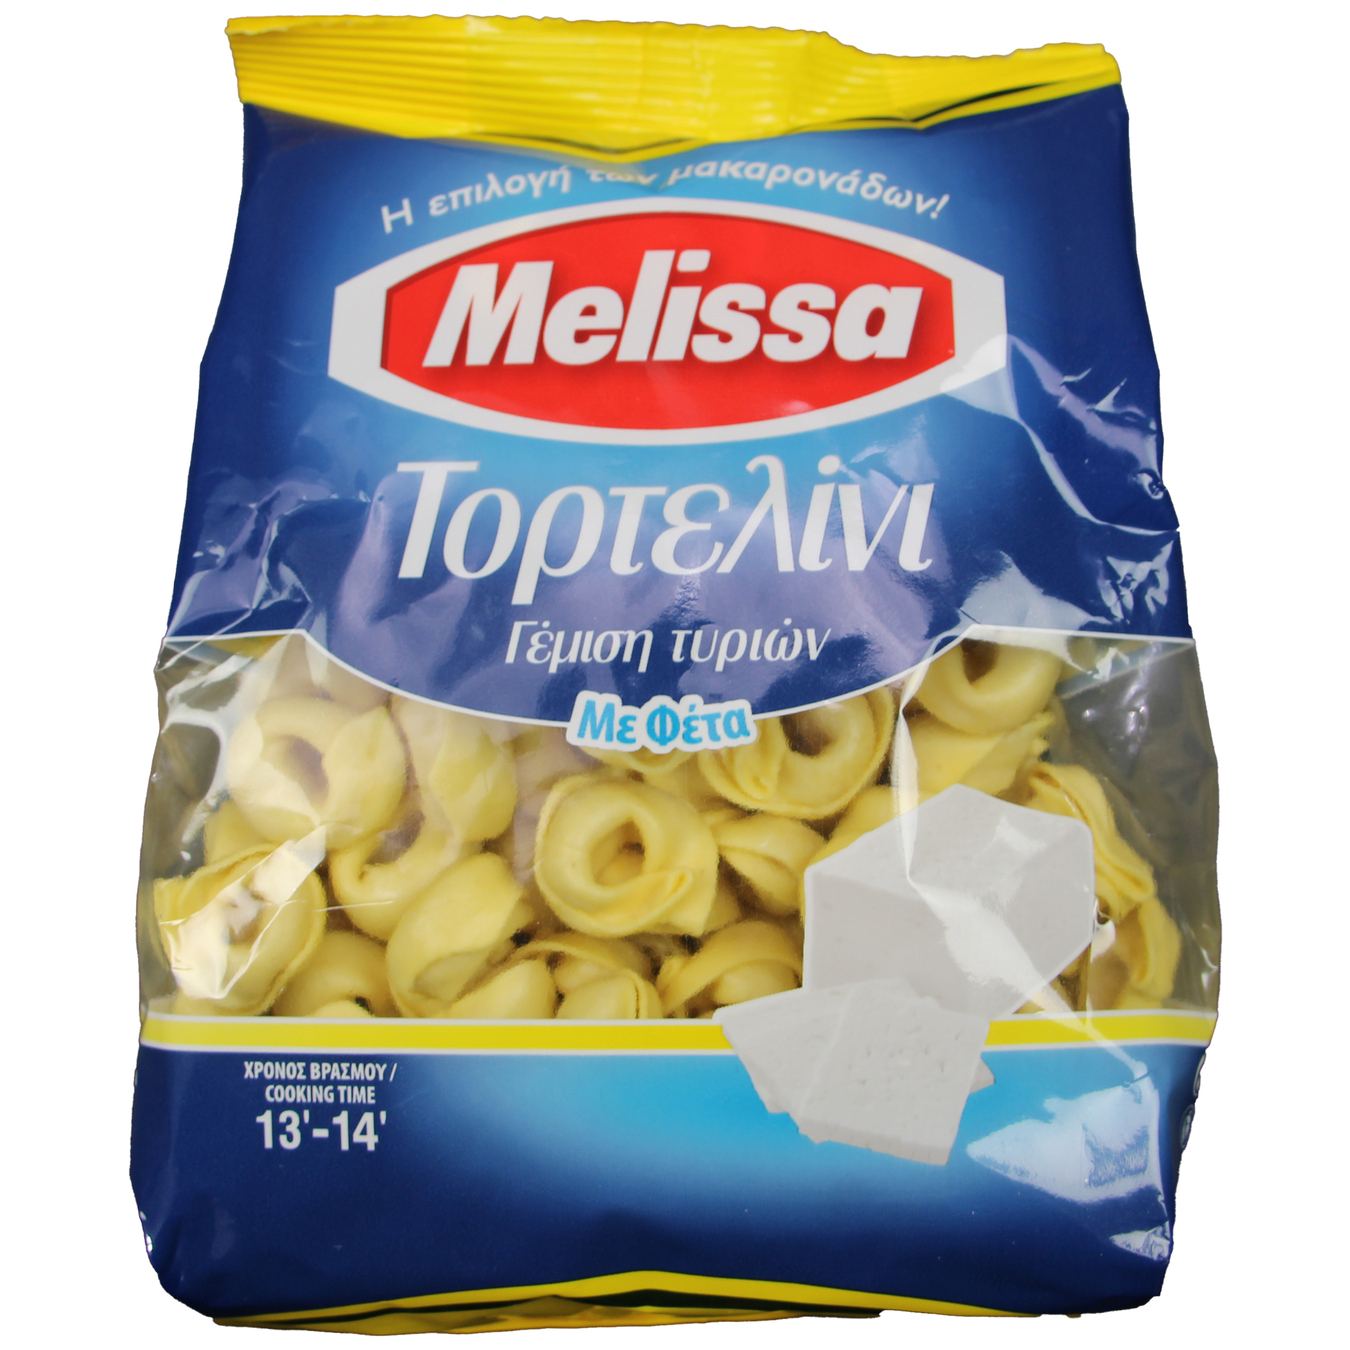 Melissa Tortellini Stuffed with Feta Cheese Egg Pasta 250g